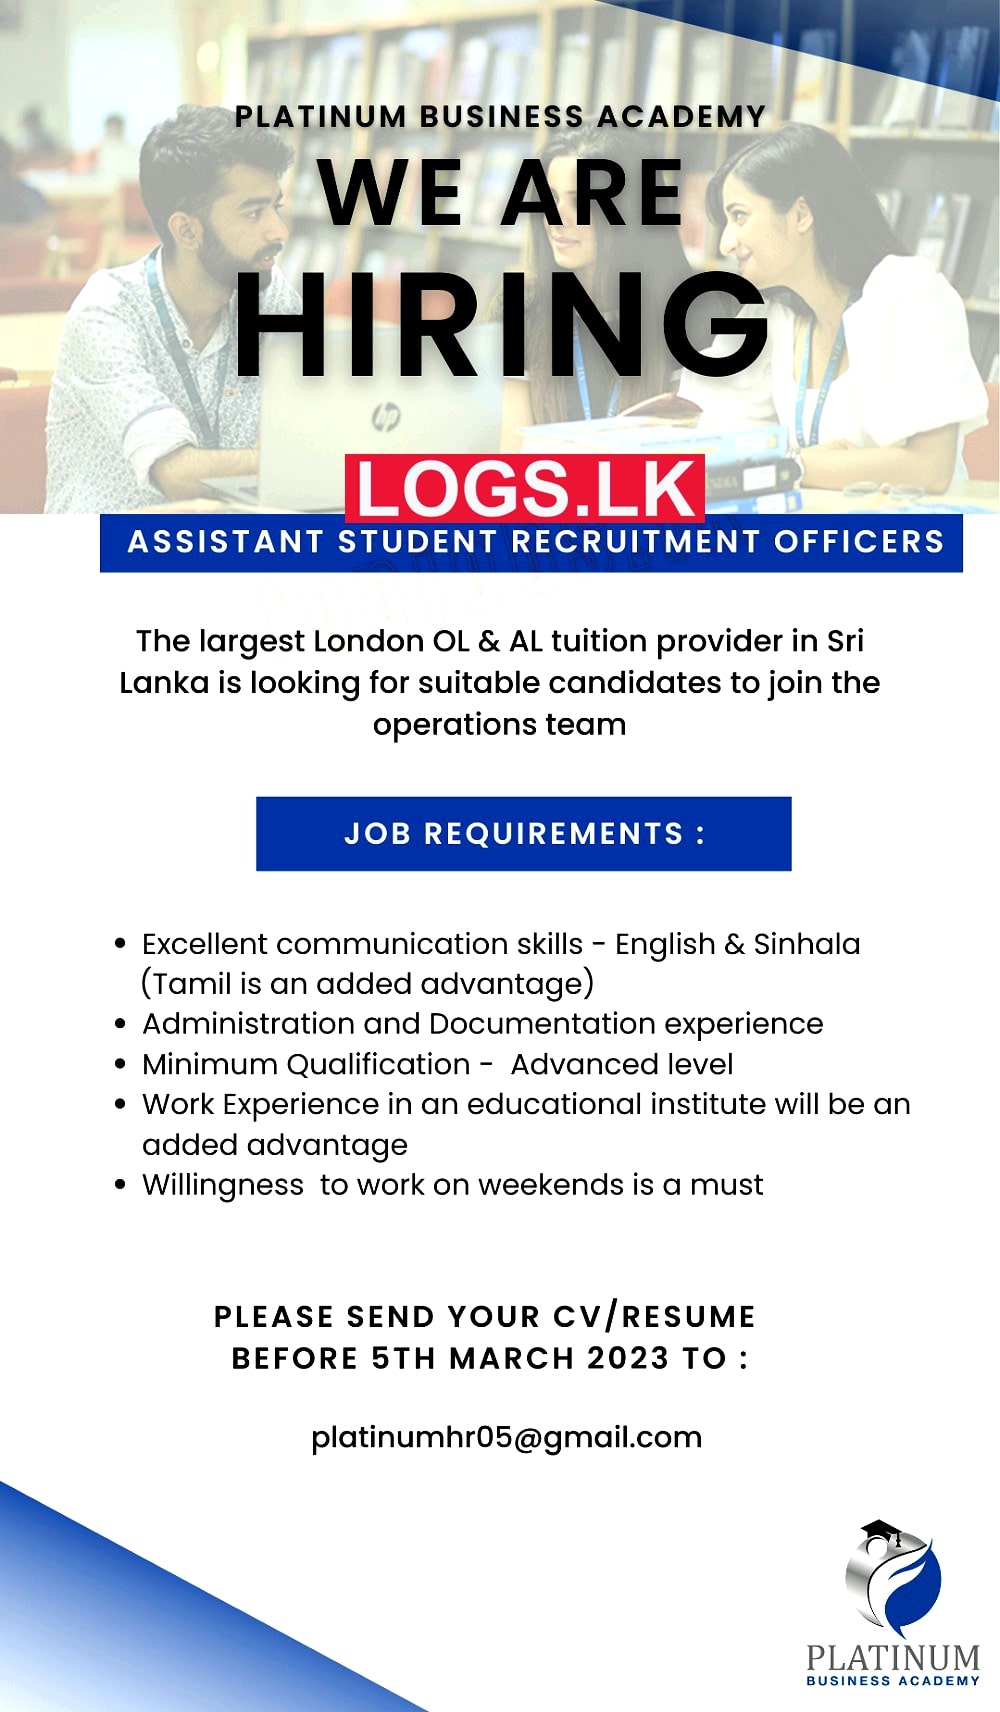 Assistant Student Recruitment Officers - Platinum Business Academy Sri Lanka Job vacancies